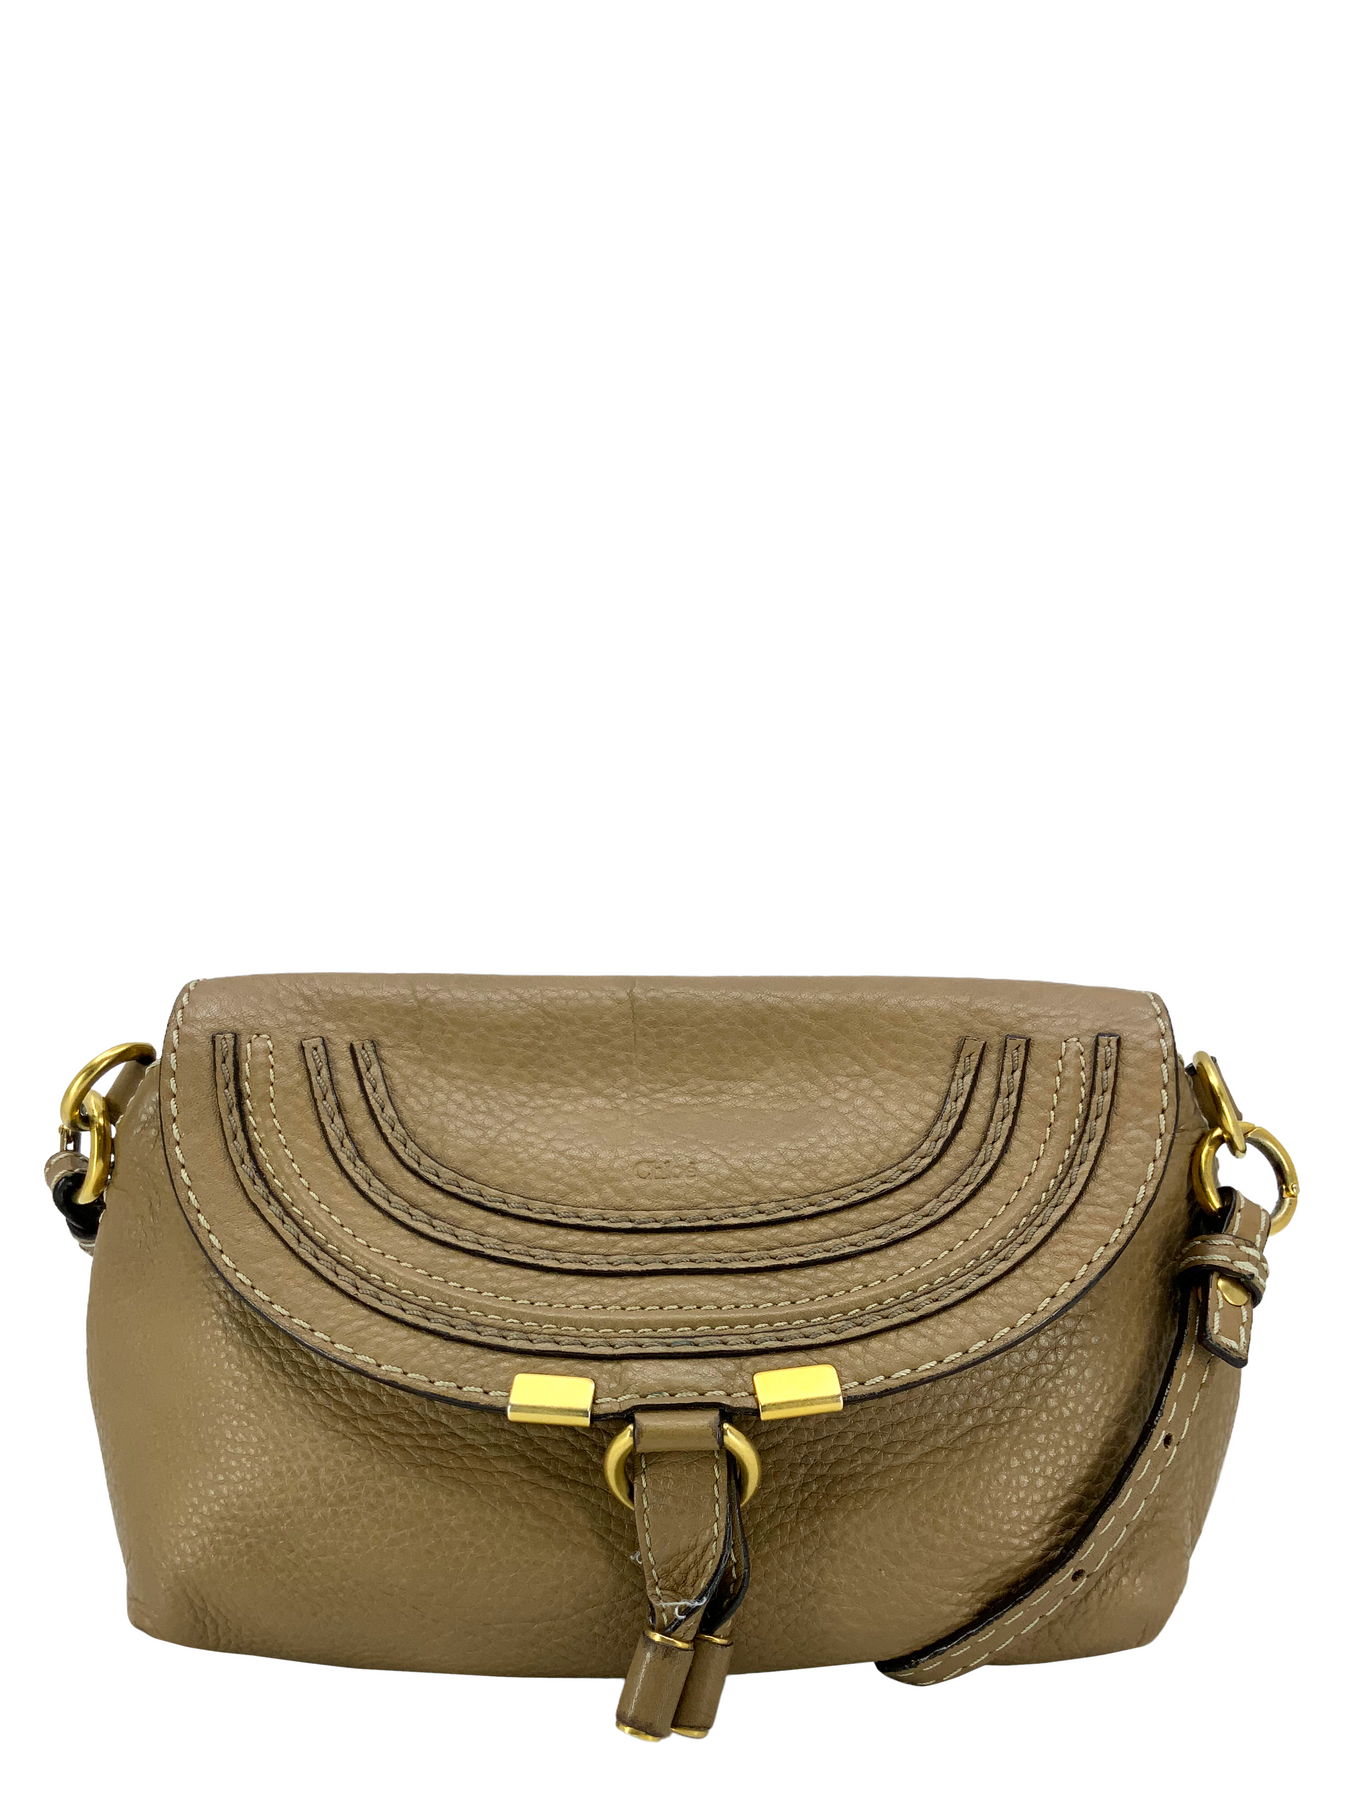 Chloe Leather Marcie Pochette Crossbody Bag - Consigned Designs